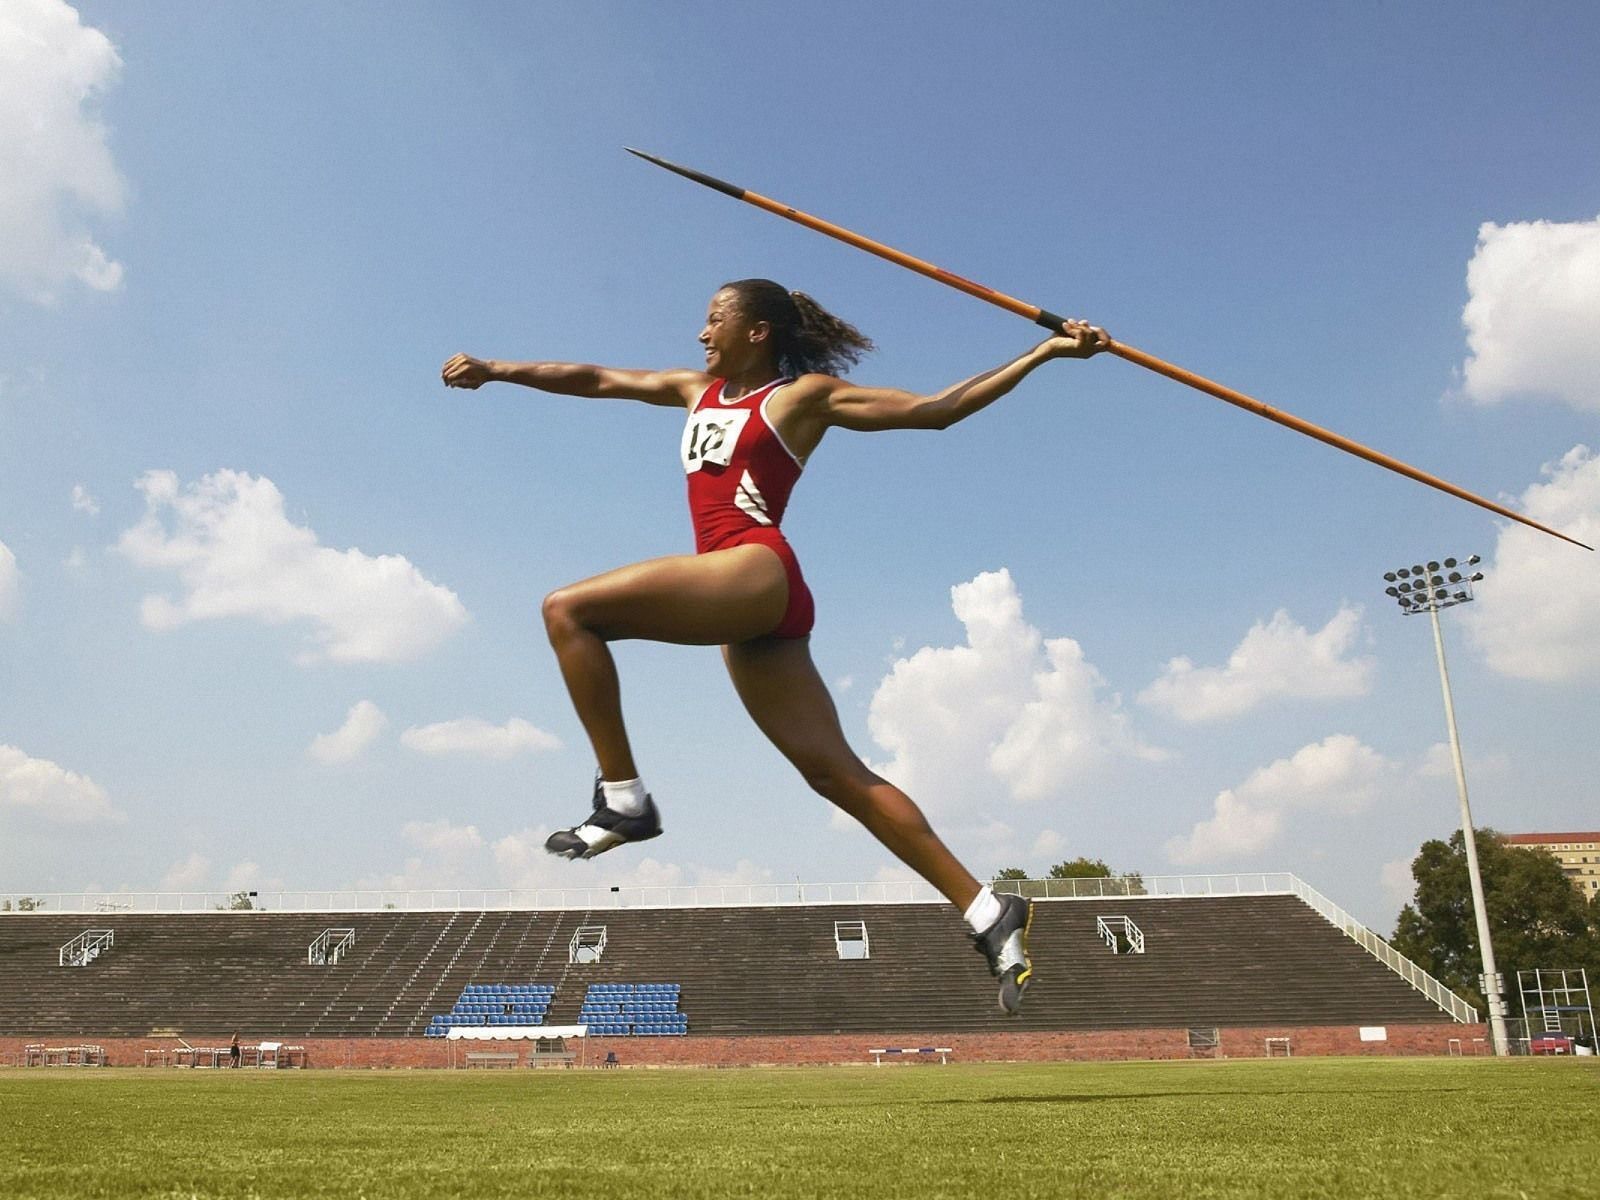 girls javelin. Women Javelin Throw 1600x1200 Wallpaper, 1600x1200 Wallpaper. Javelin throw, Track and field, Javelin